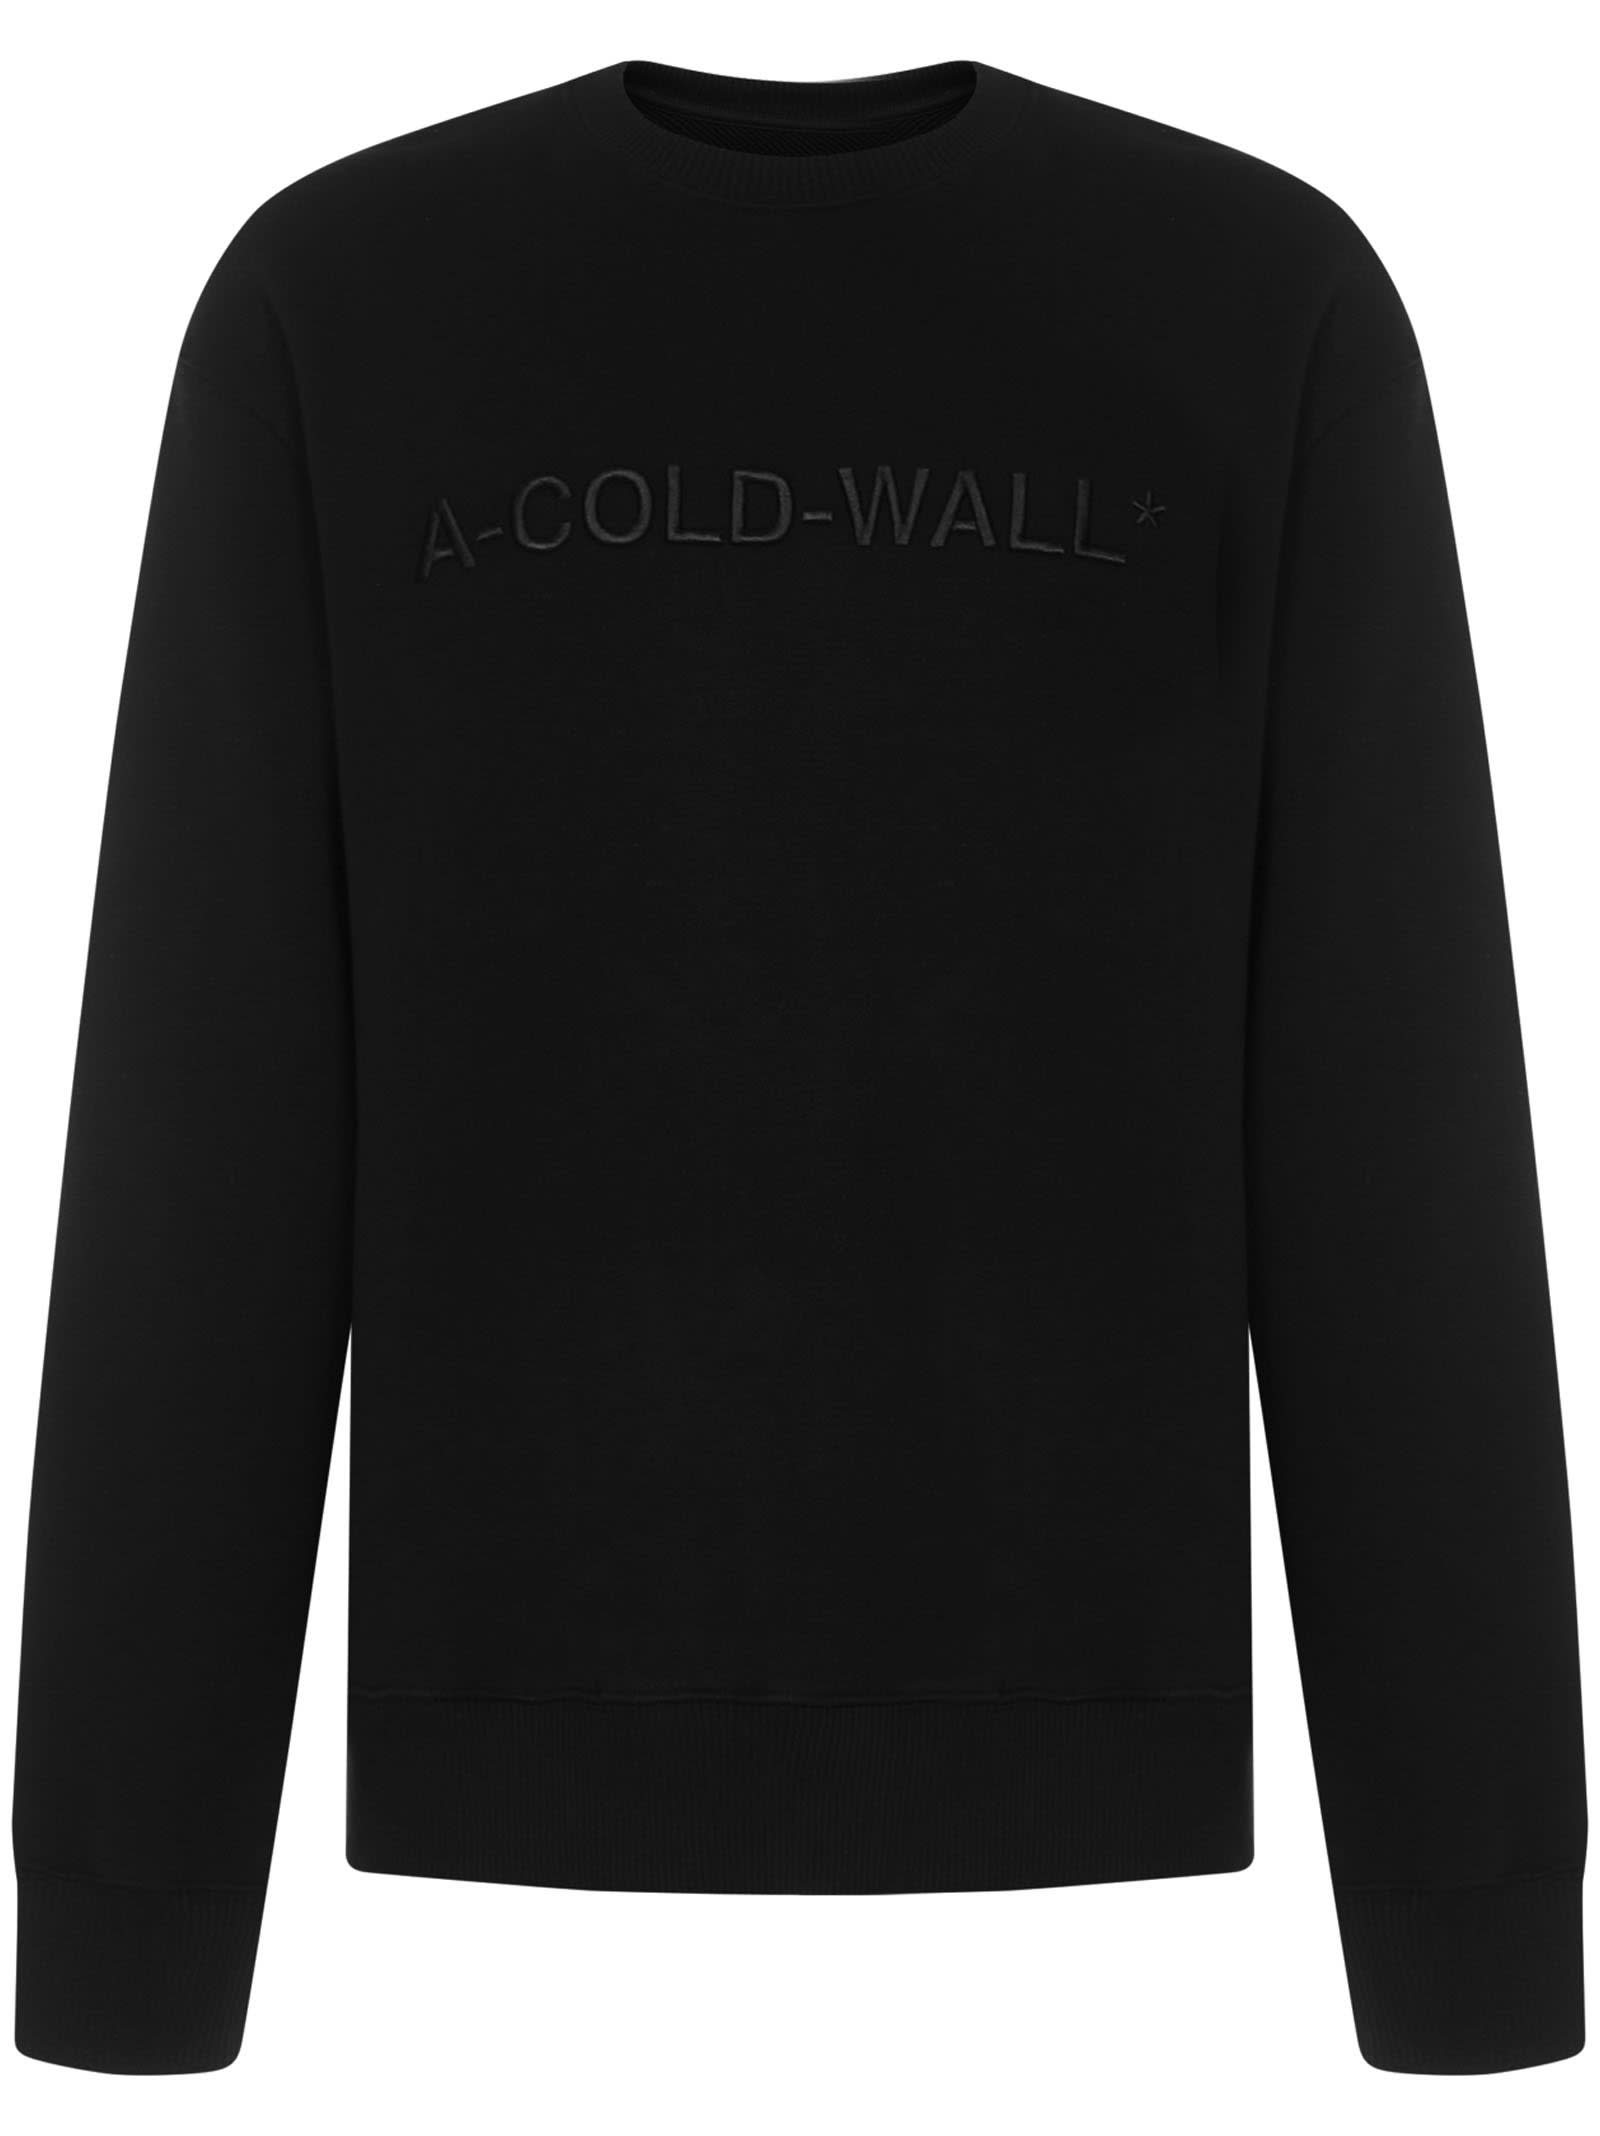 A-COLD-WALL A Cold Wall Sweatshirt